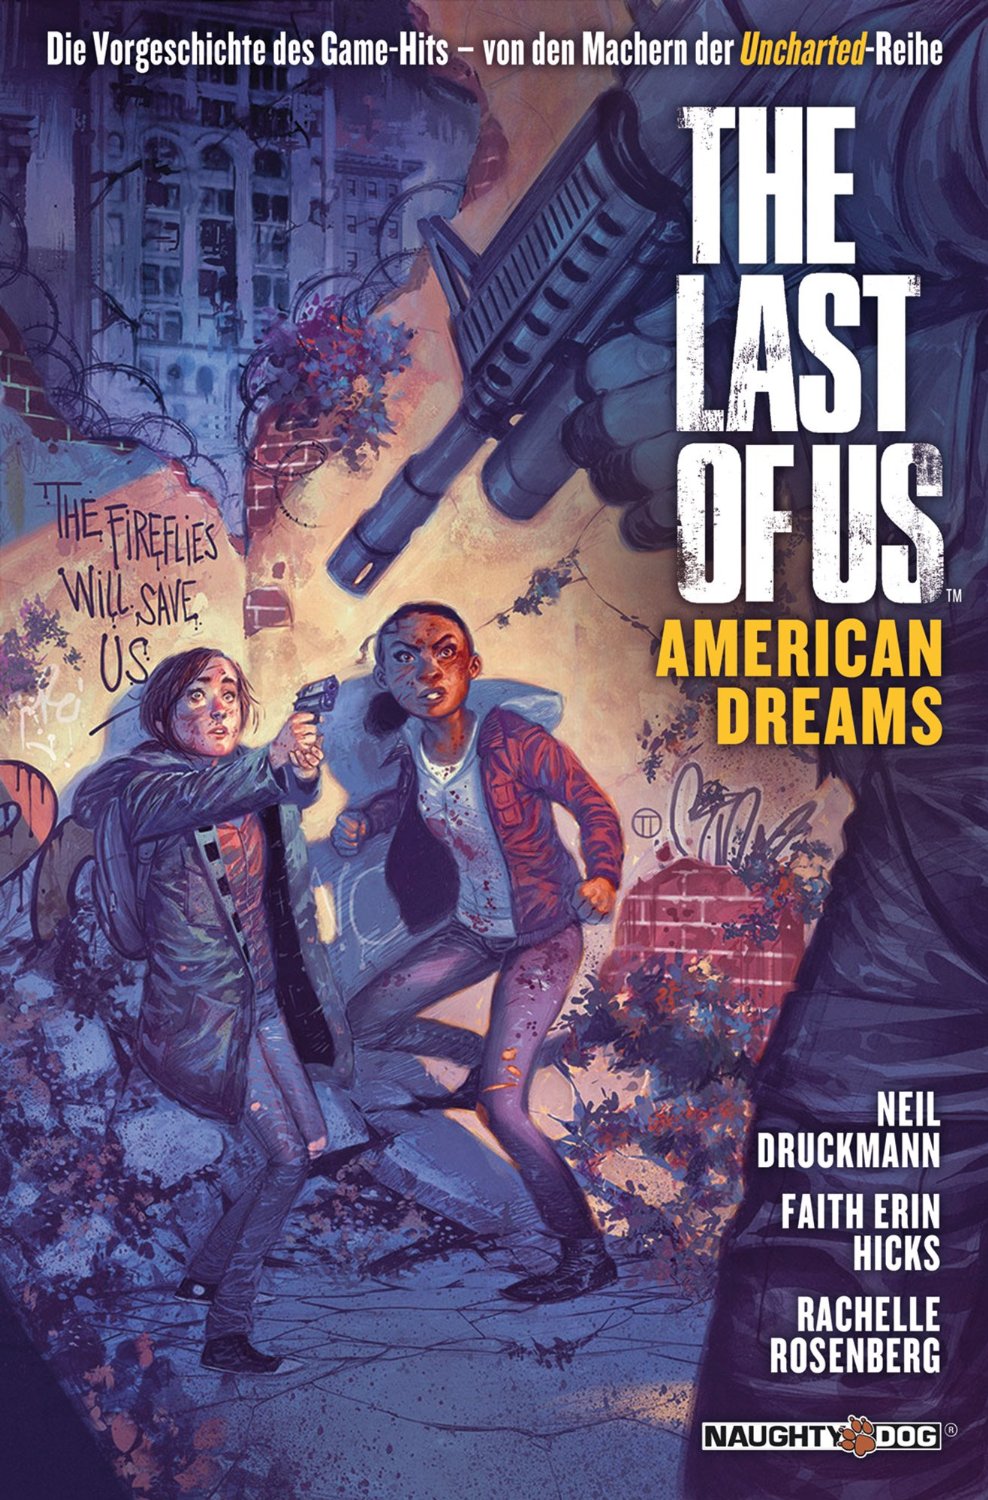 The Last of us American Dreams